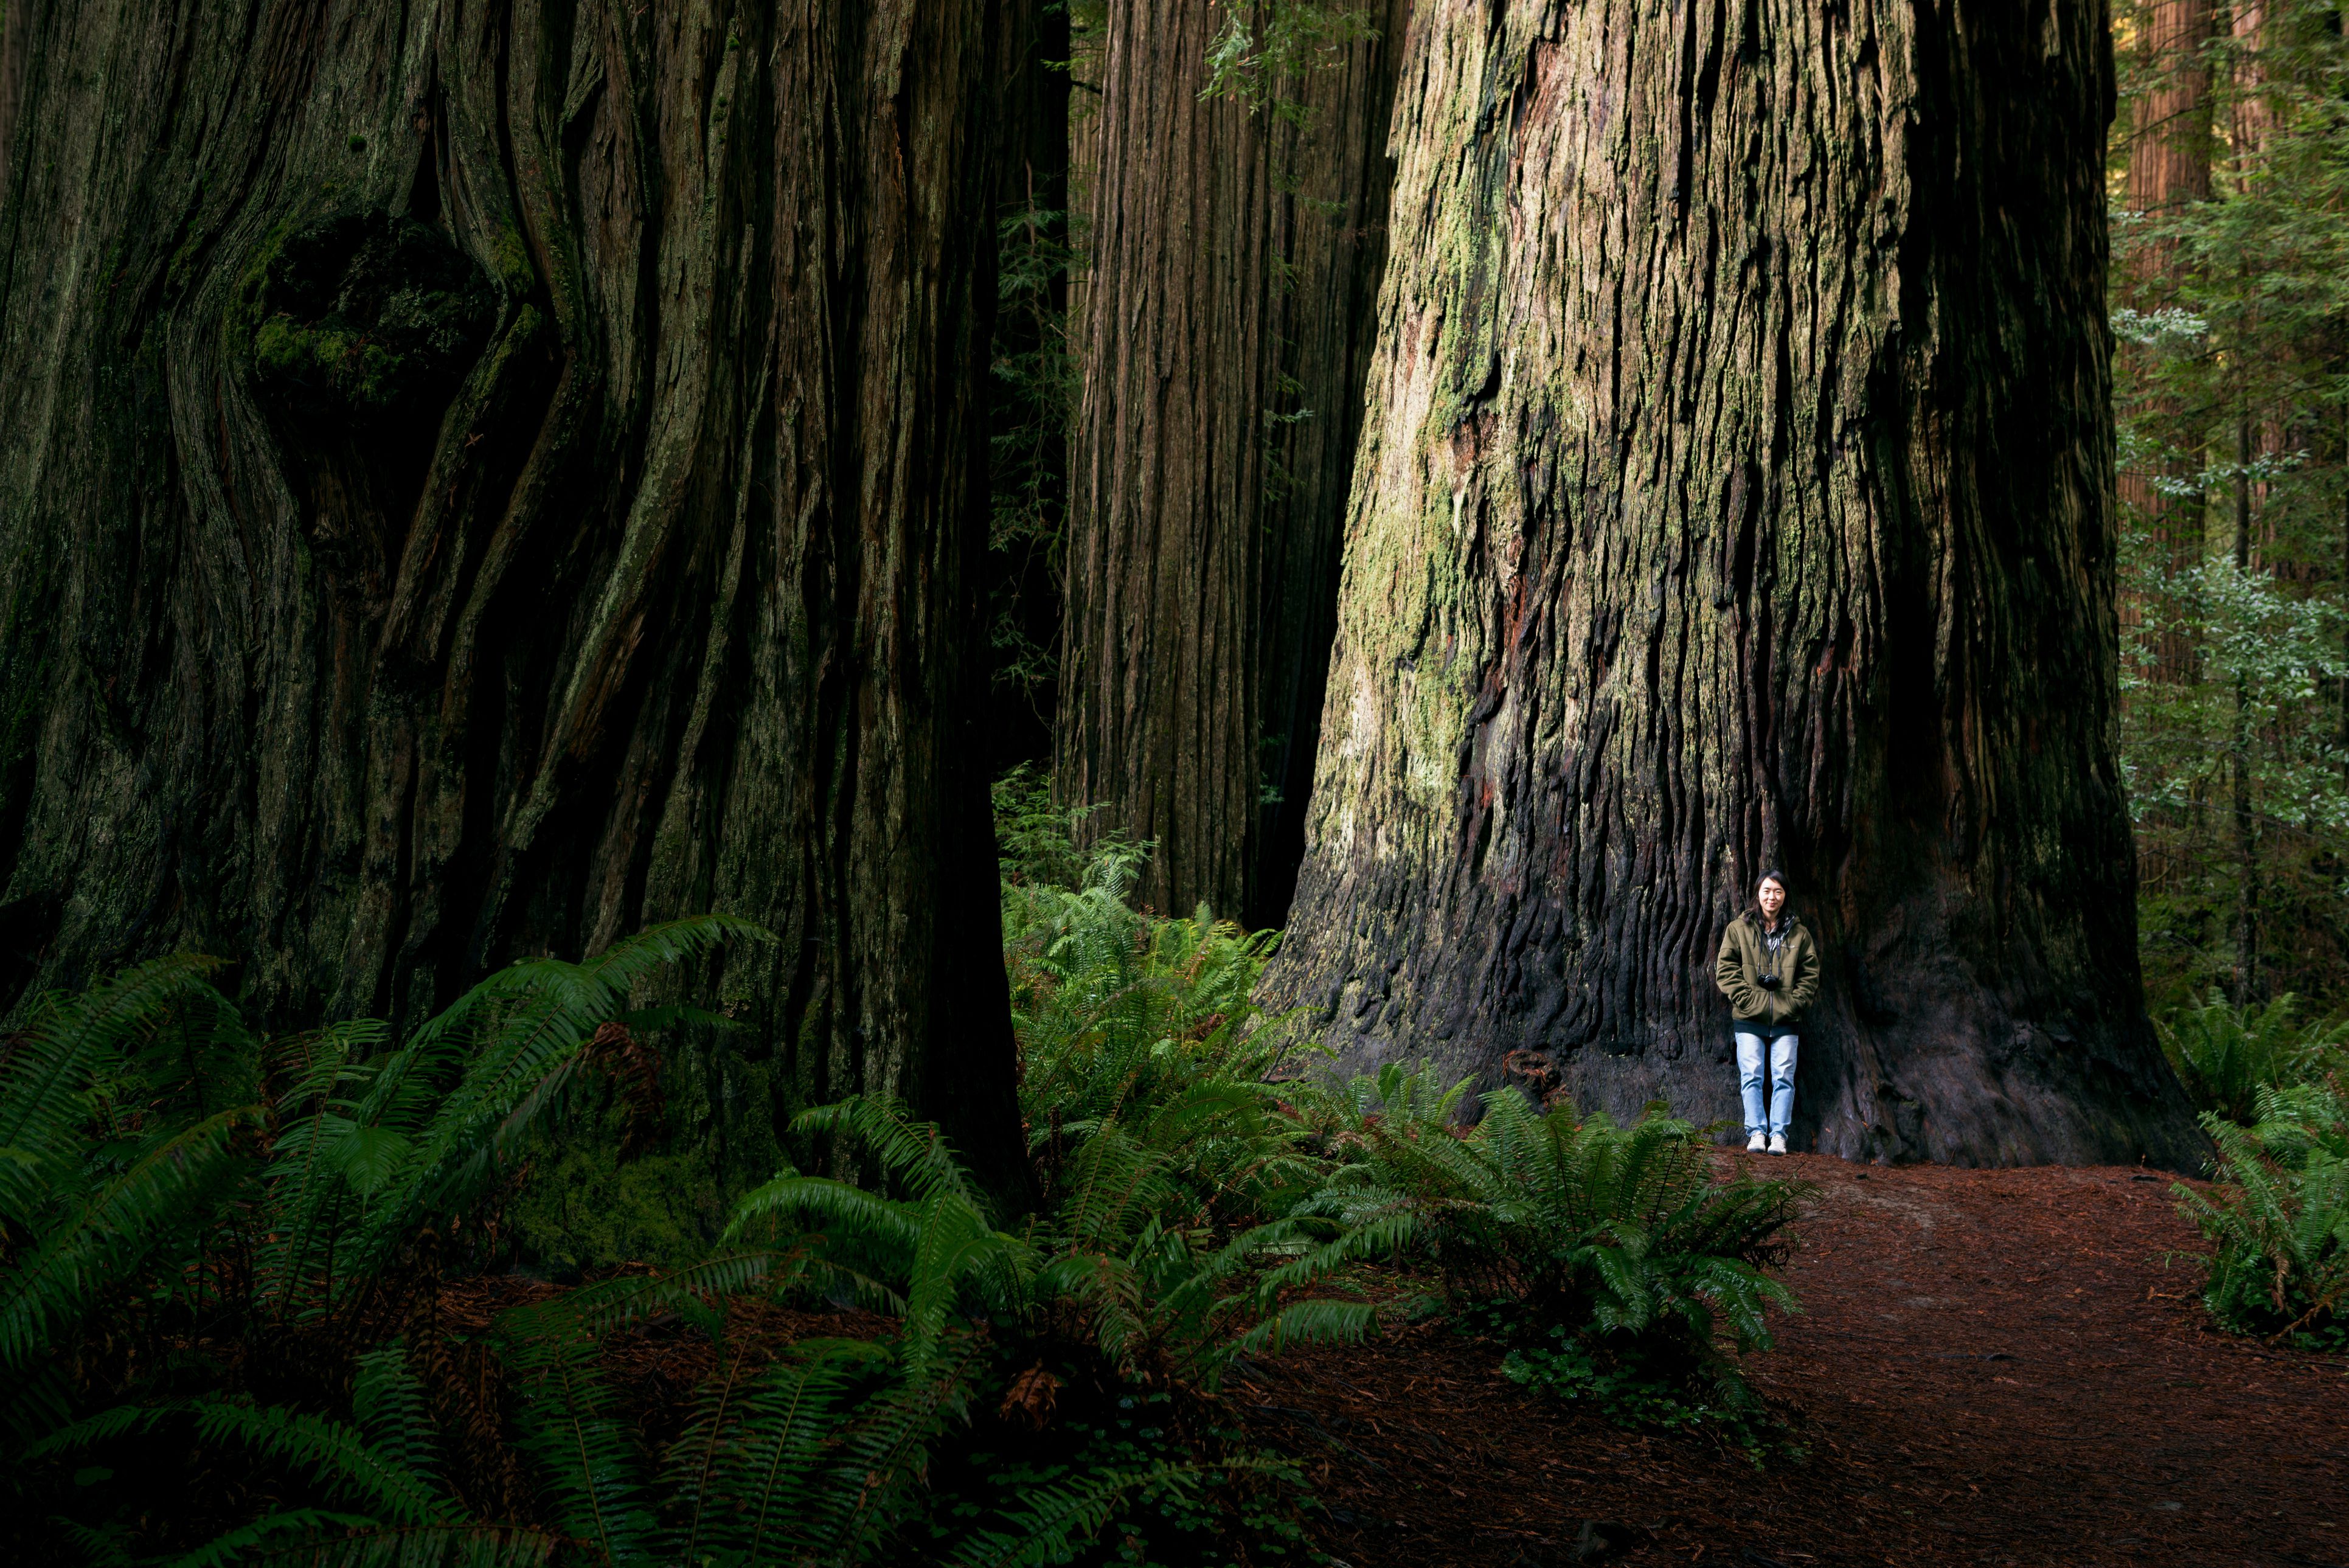 Money Saving Tips for Visiting Redwood National Park